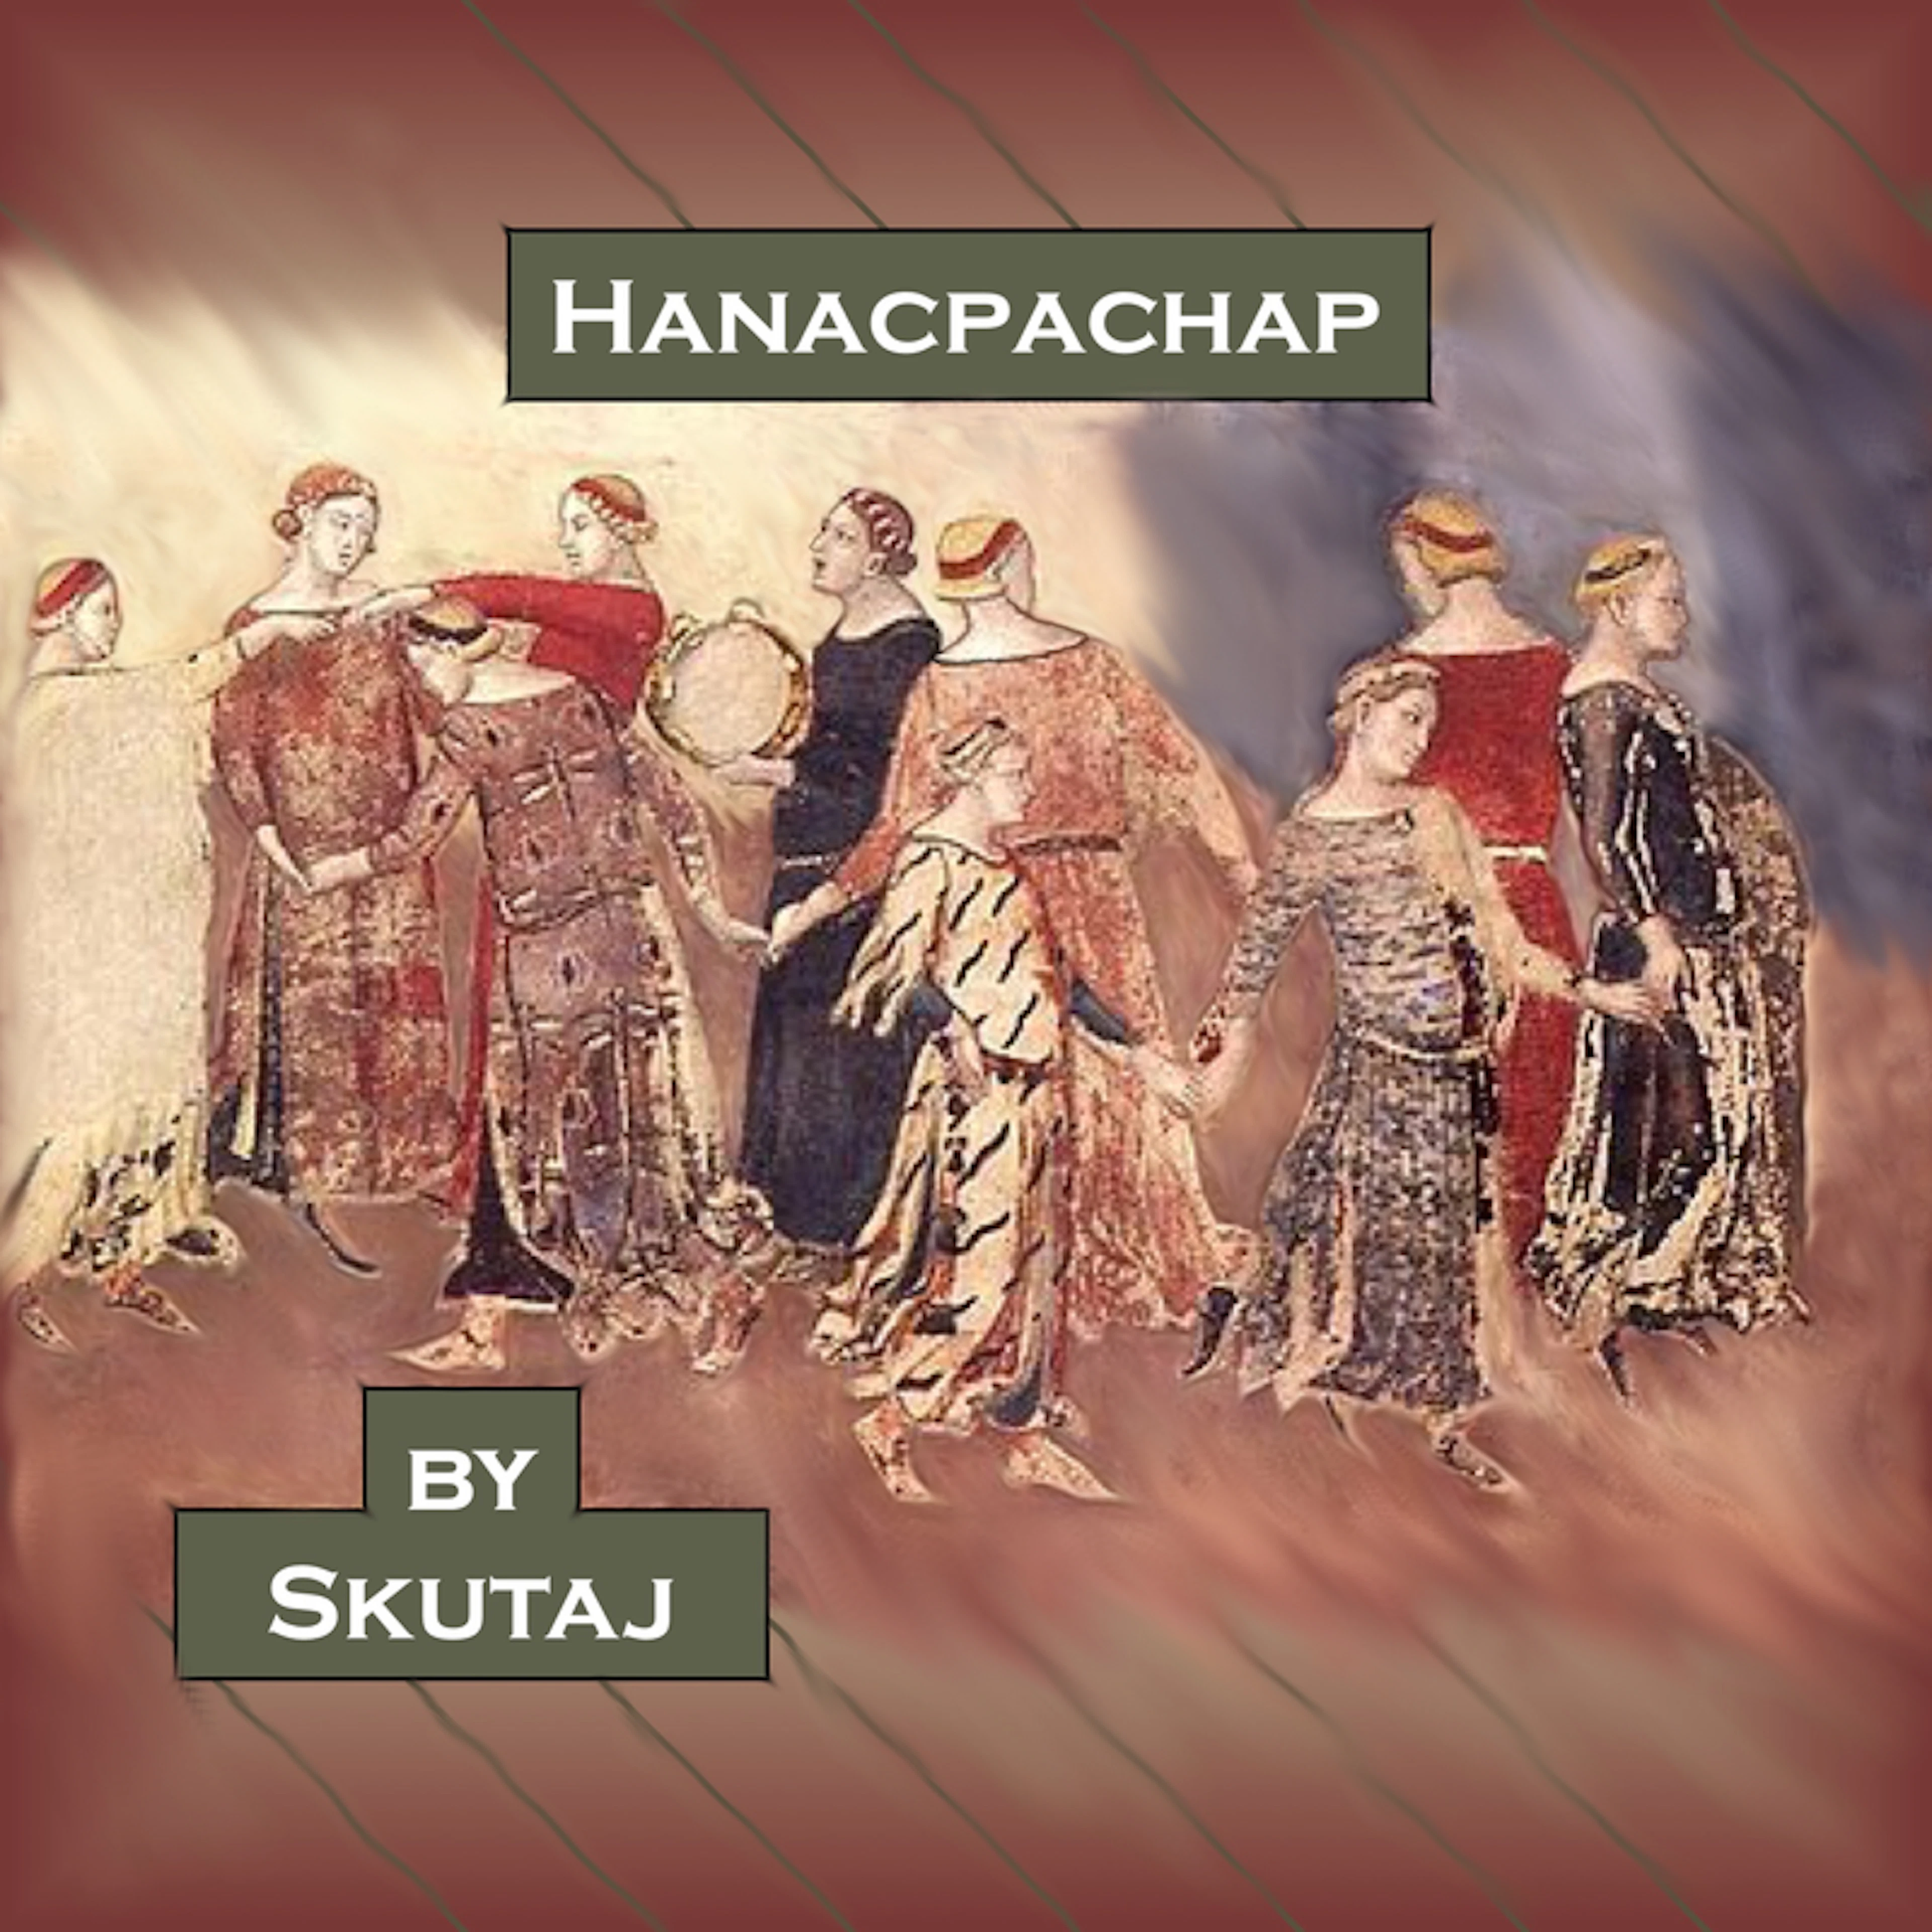 Hanacpachap audio track